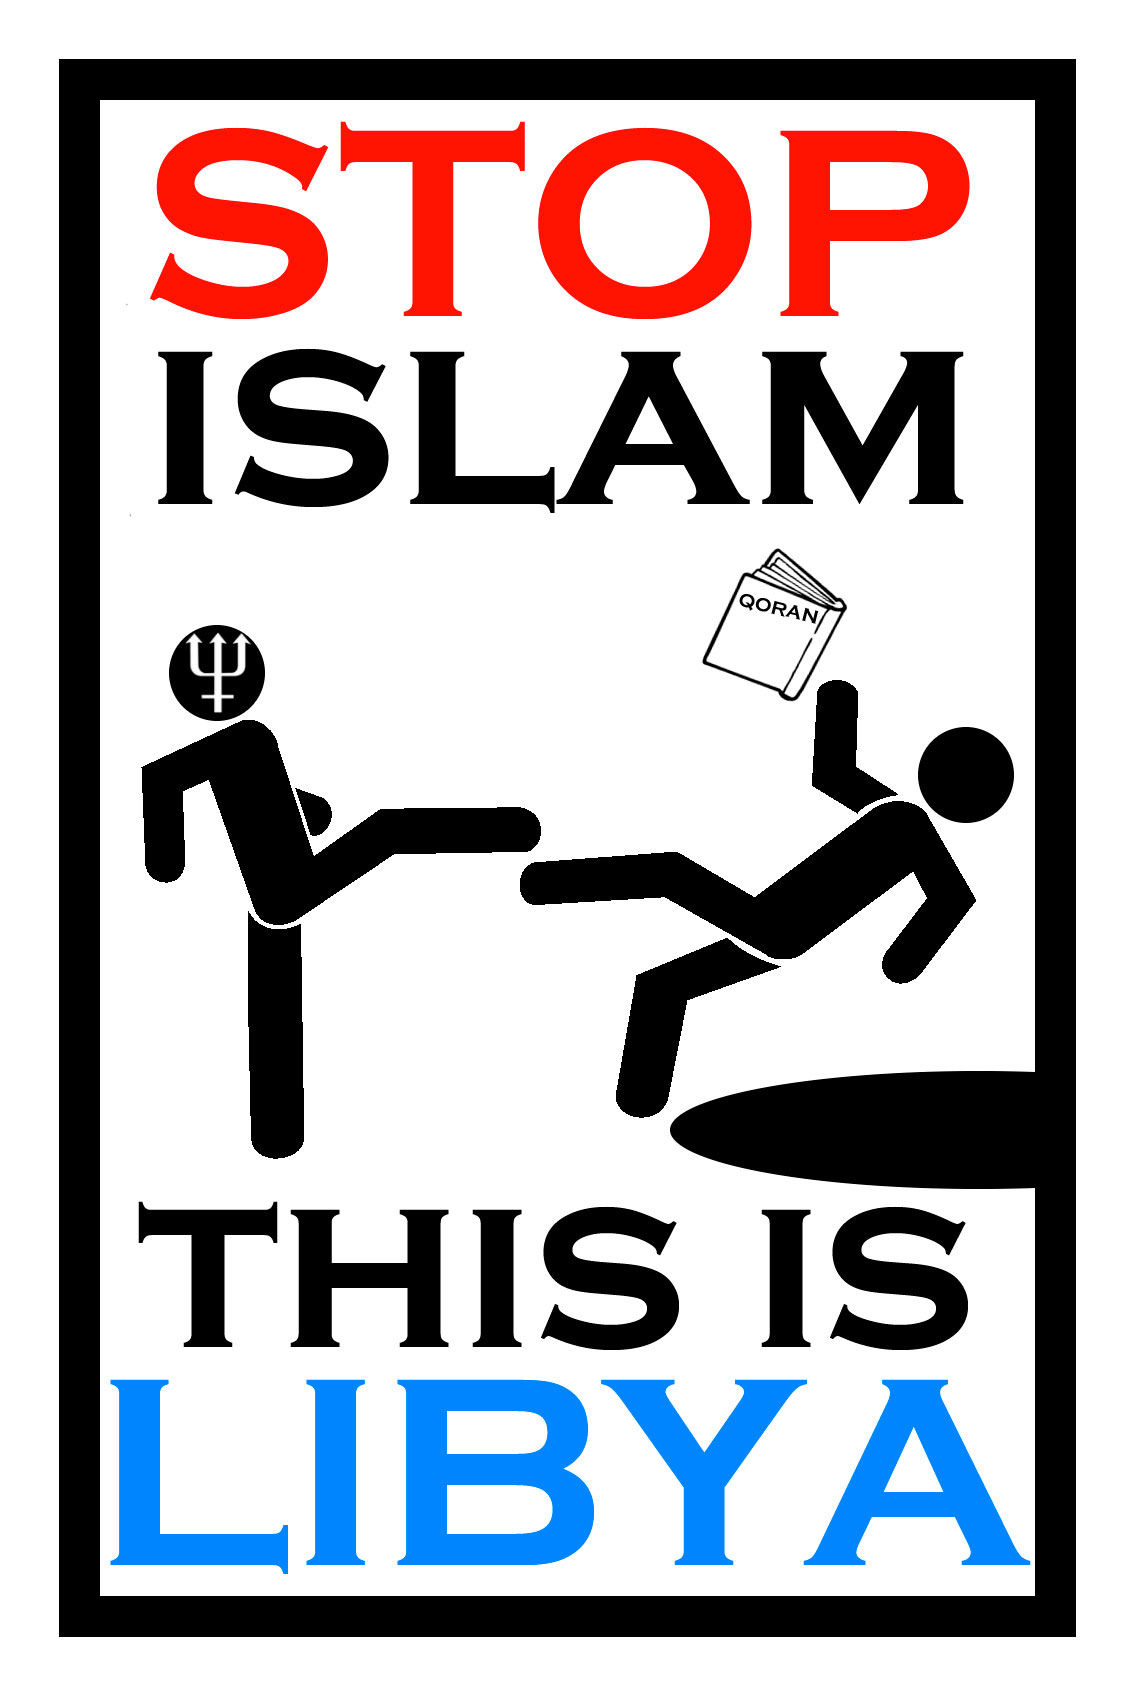 islam_stop_islamization___anti_islam_by_elvis4-d8r4l2r